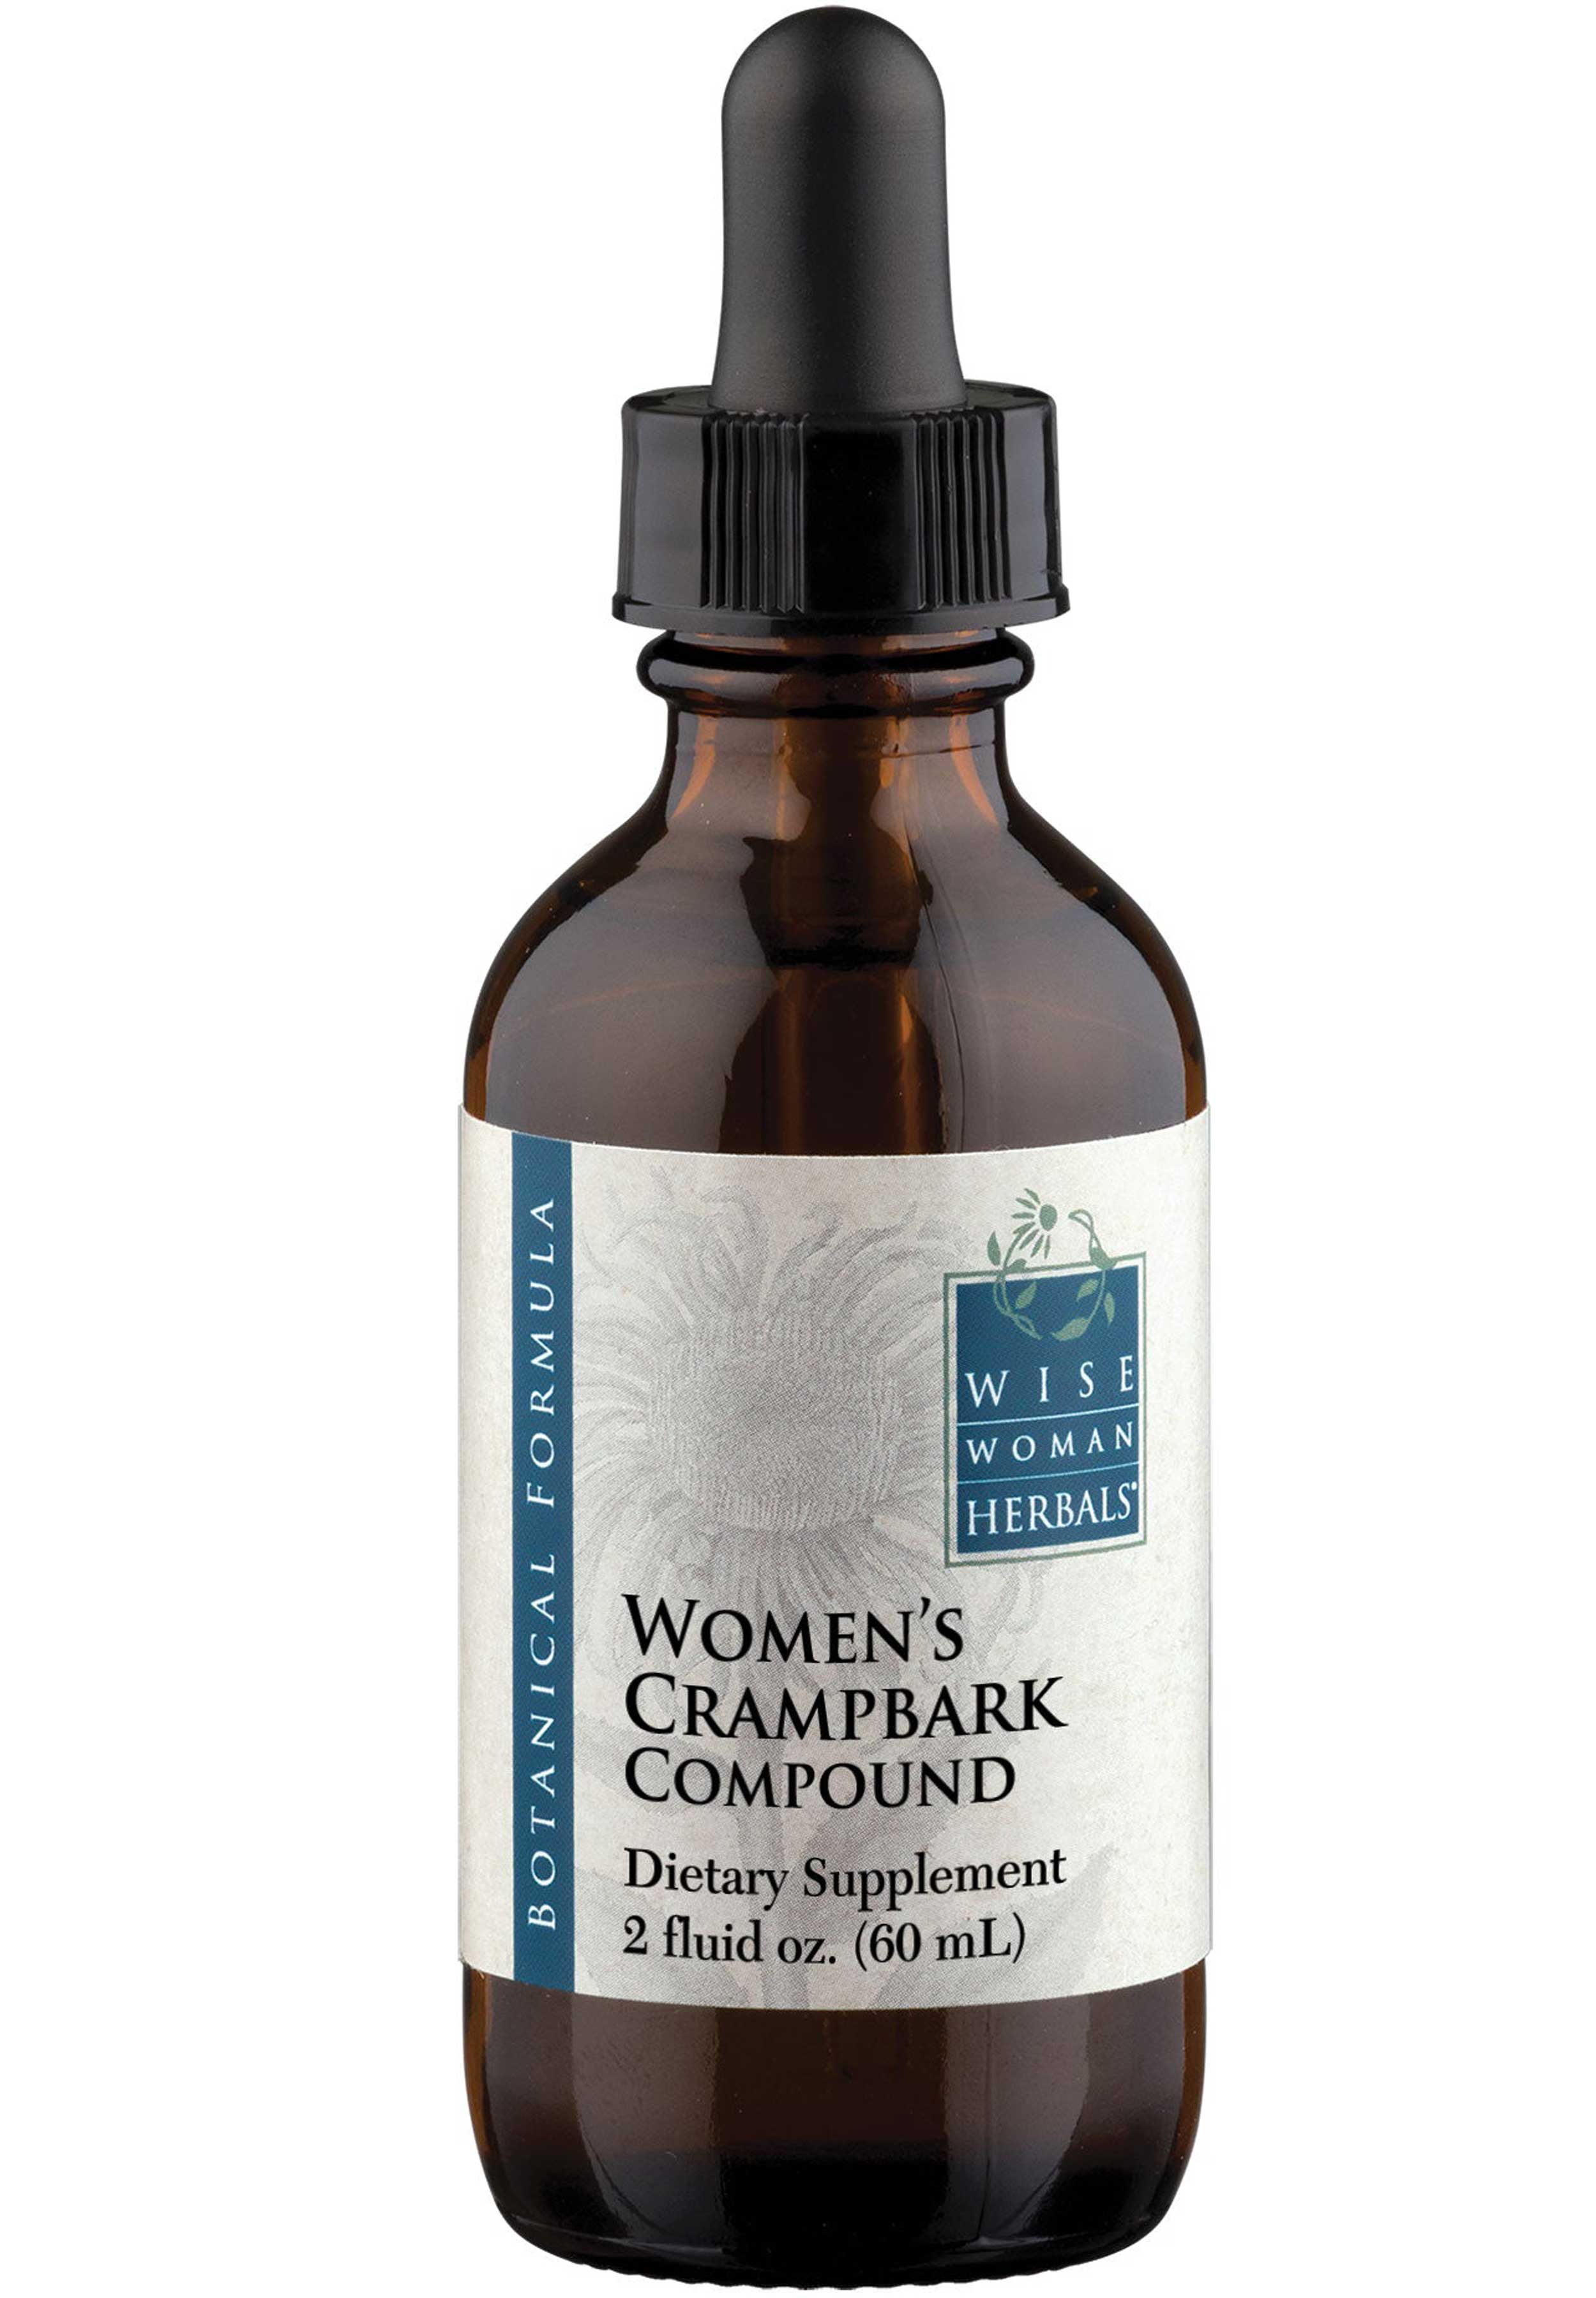 Wise Woman Herbals Women's Crampbark Compound